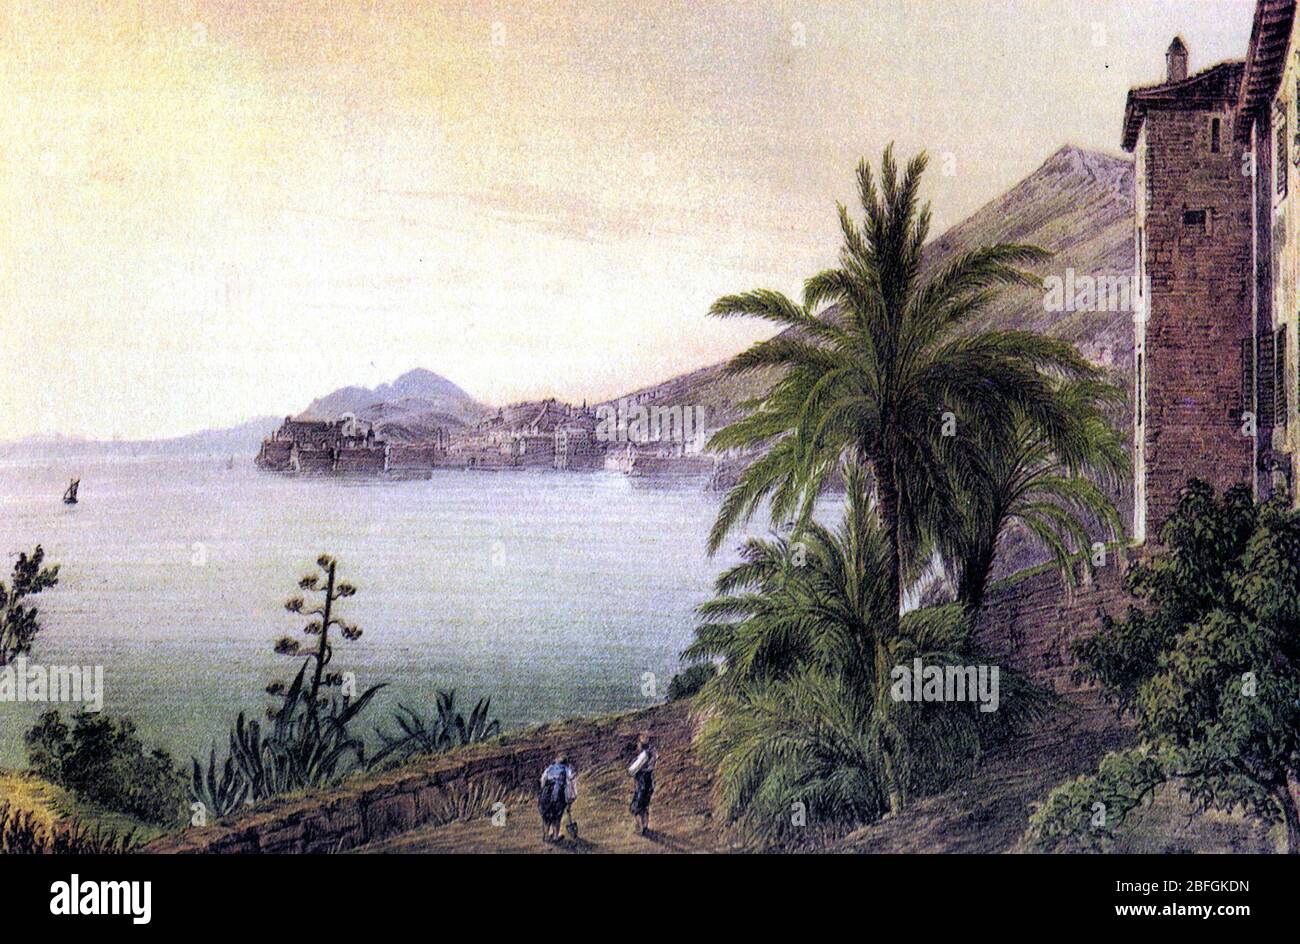 Dubrovnik (then called Ragusa) around 1840 - Jakob Alt Stock Photo